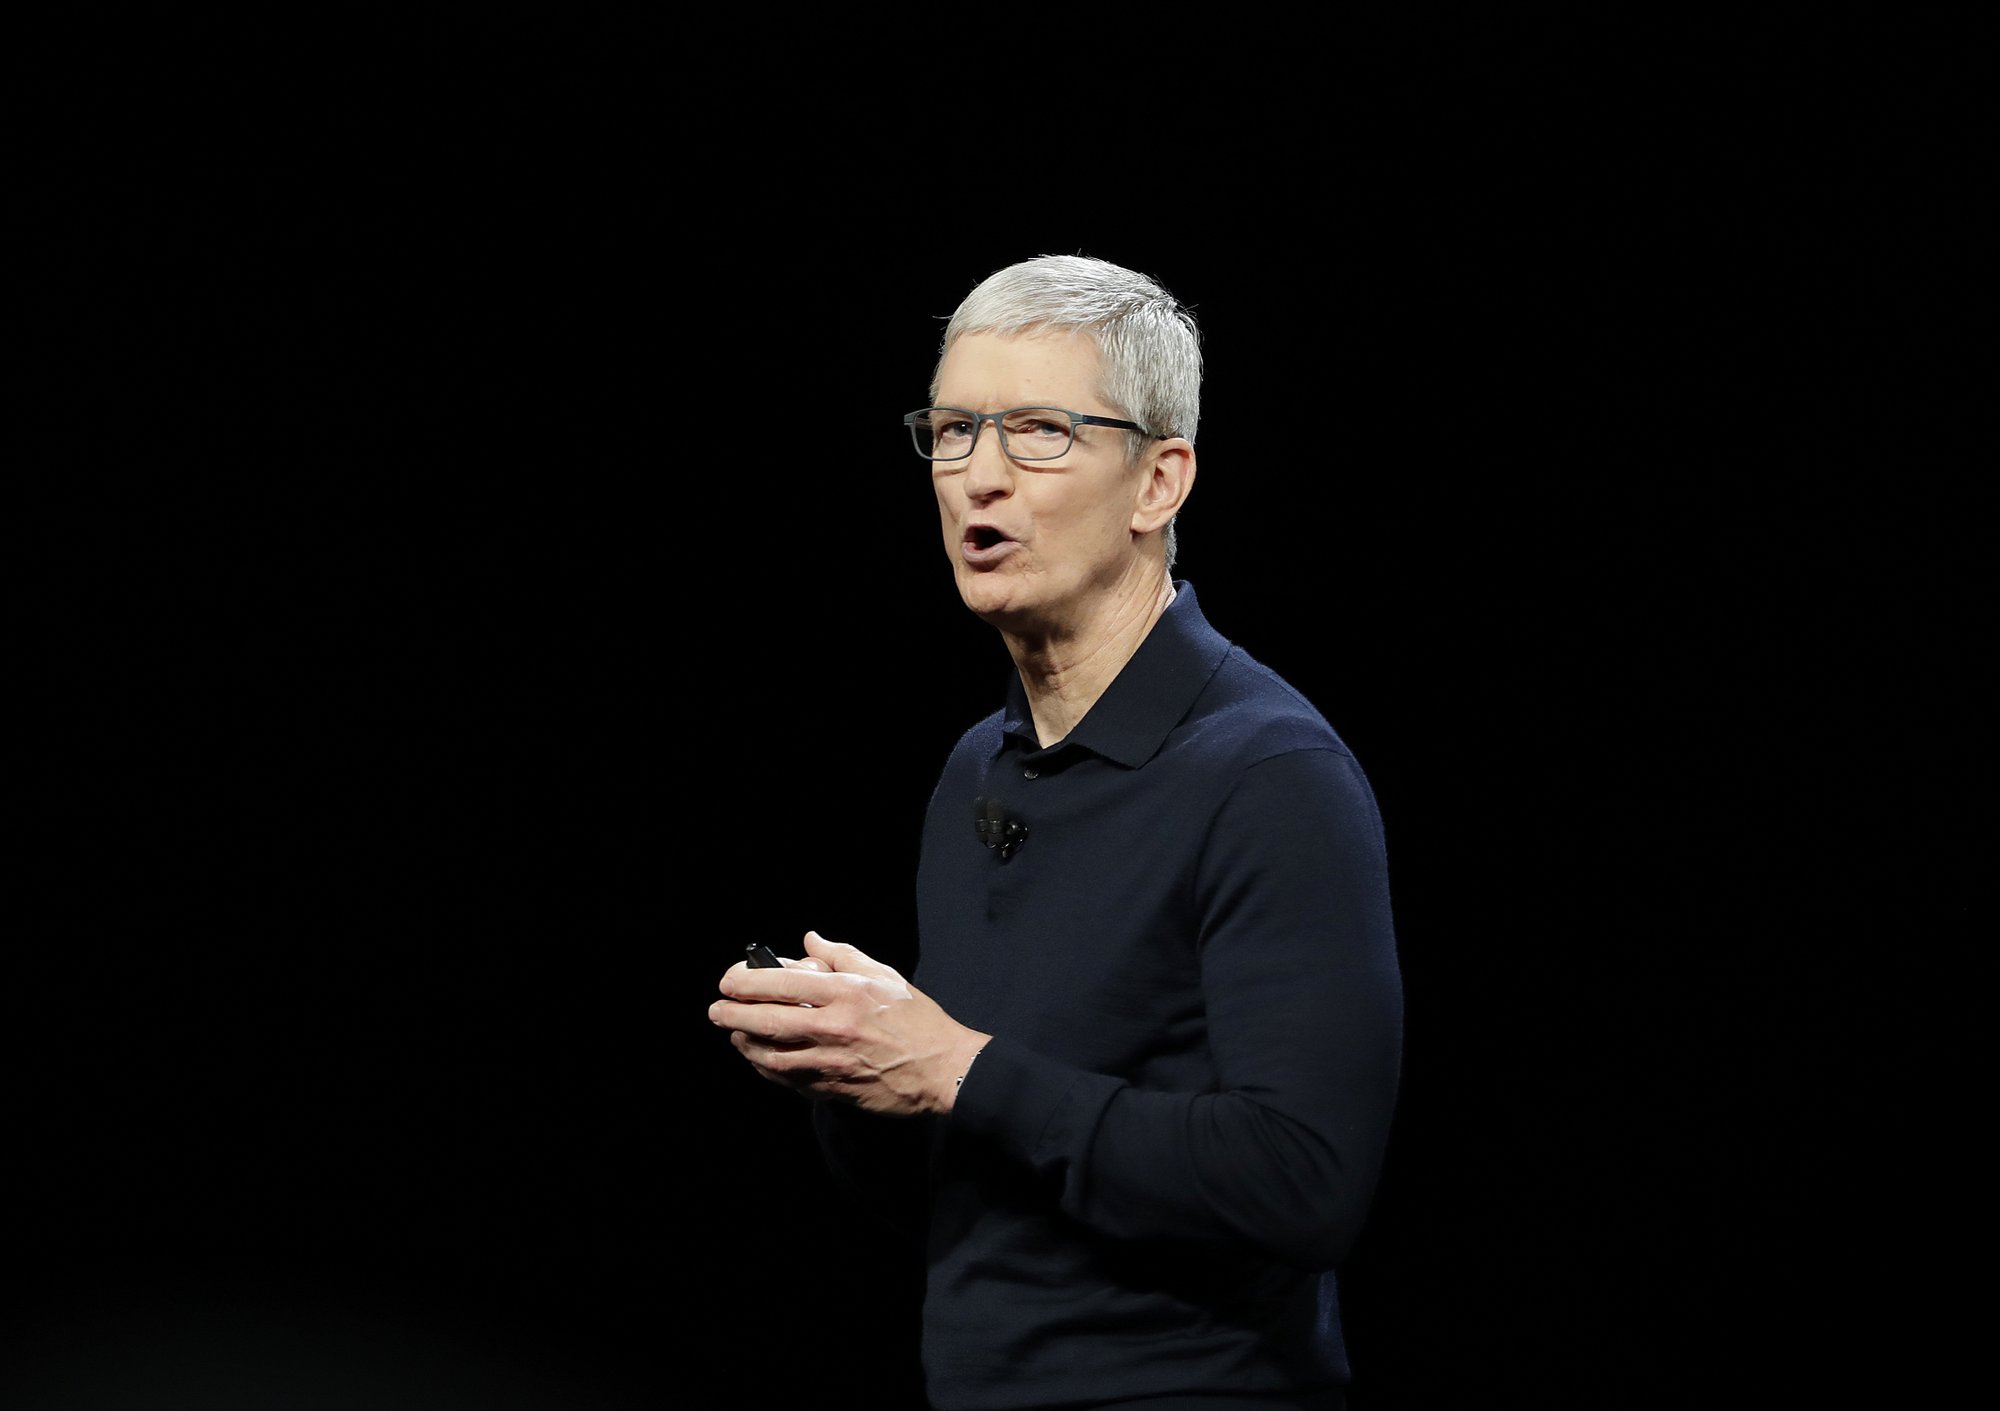 Tim Cook, CEO of Apple. (Credit: AP)